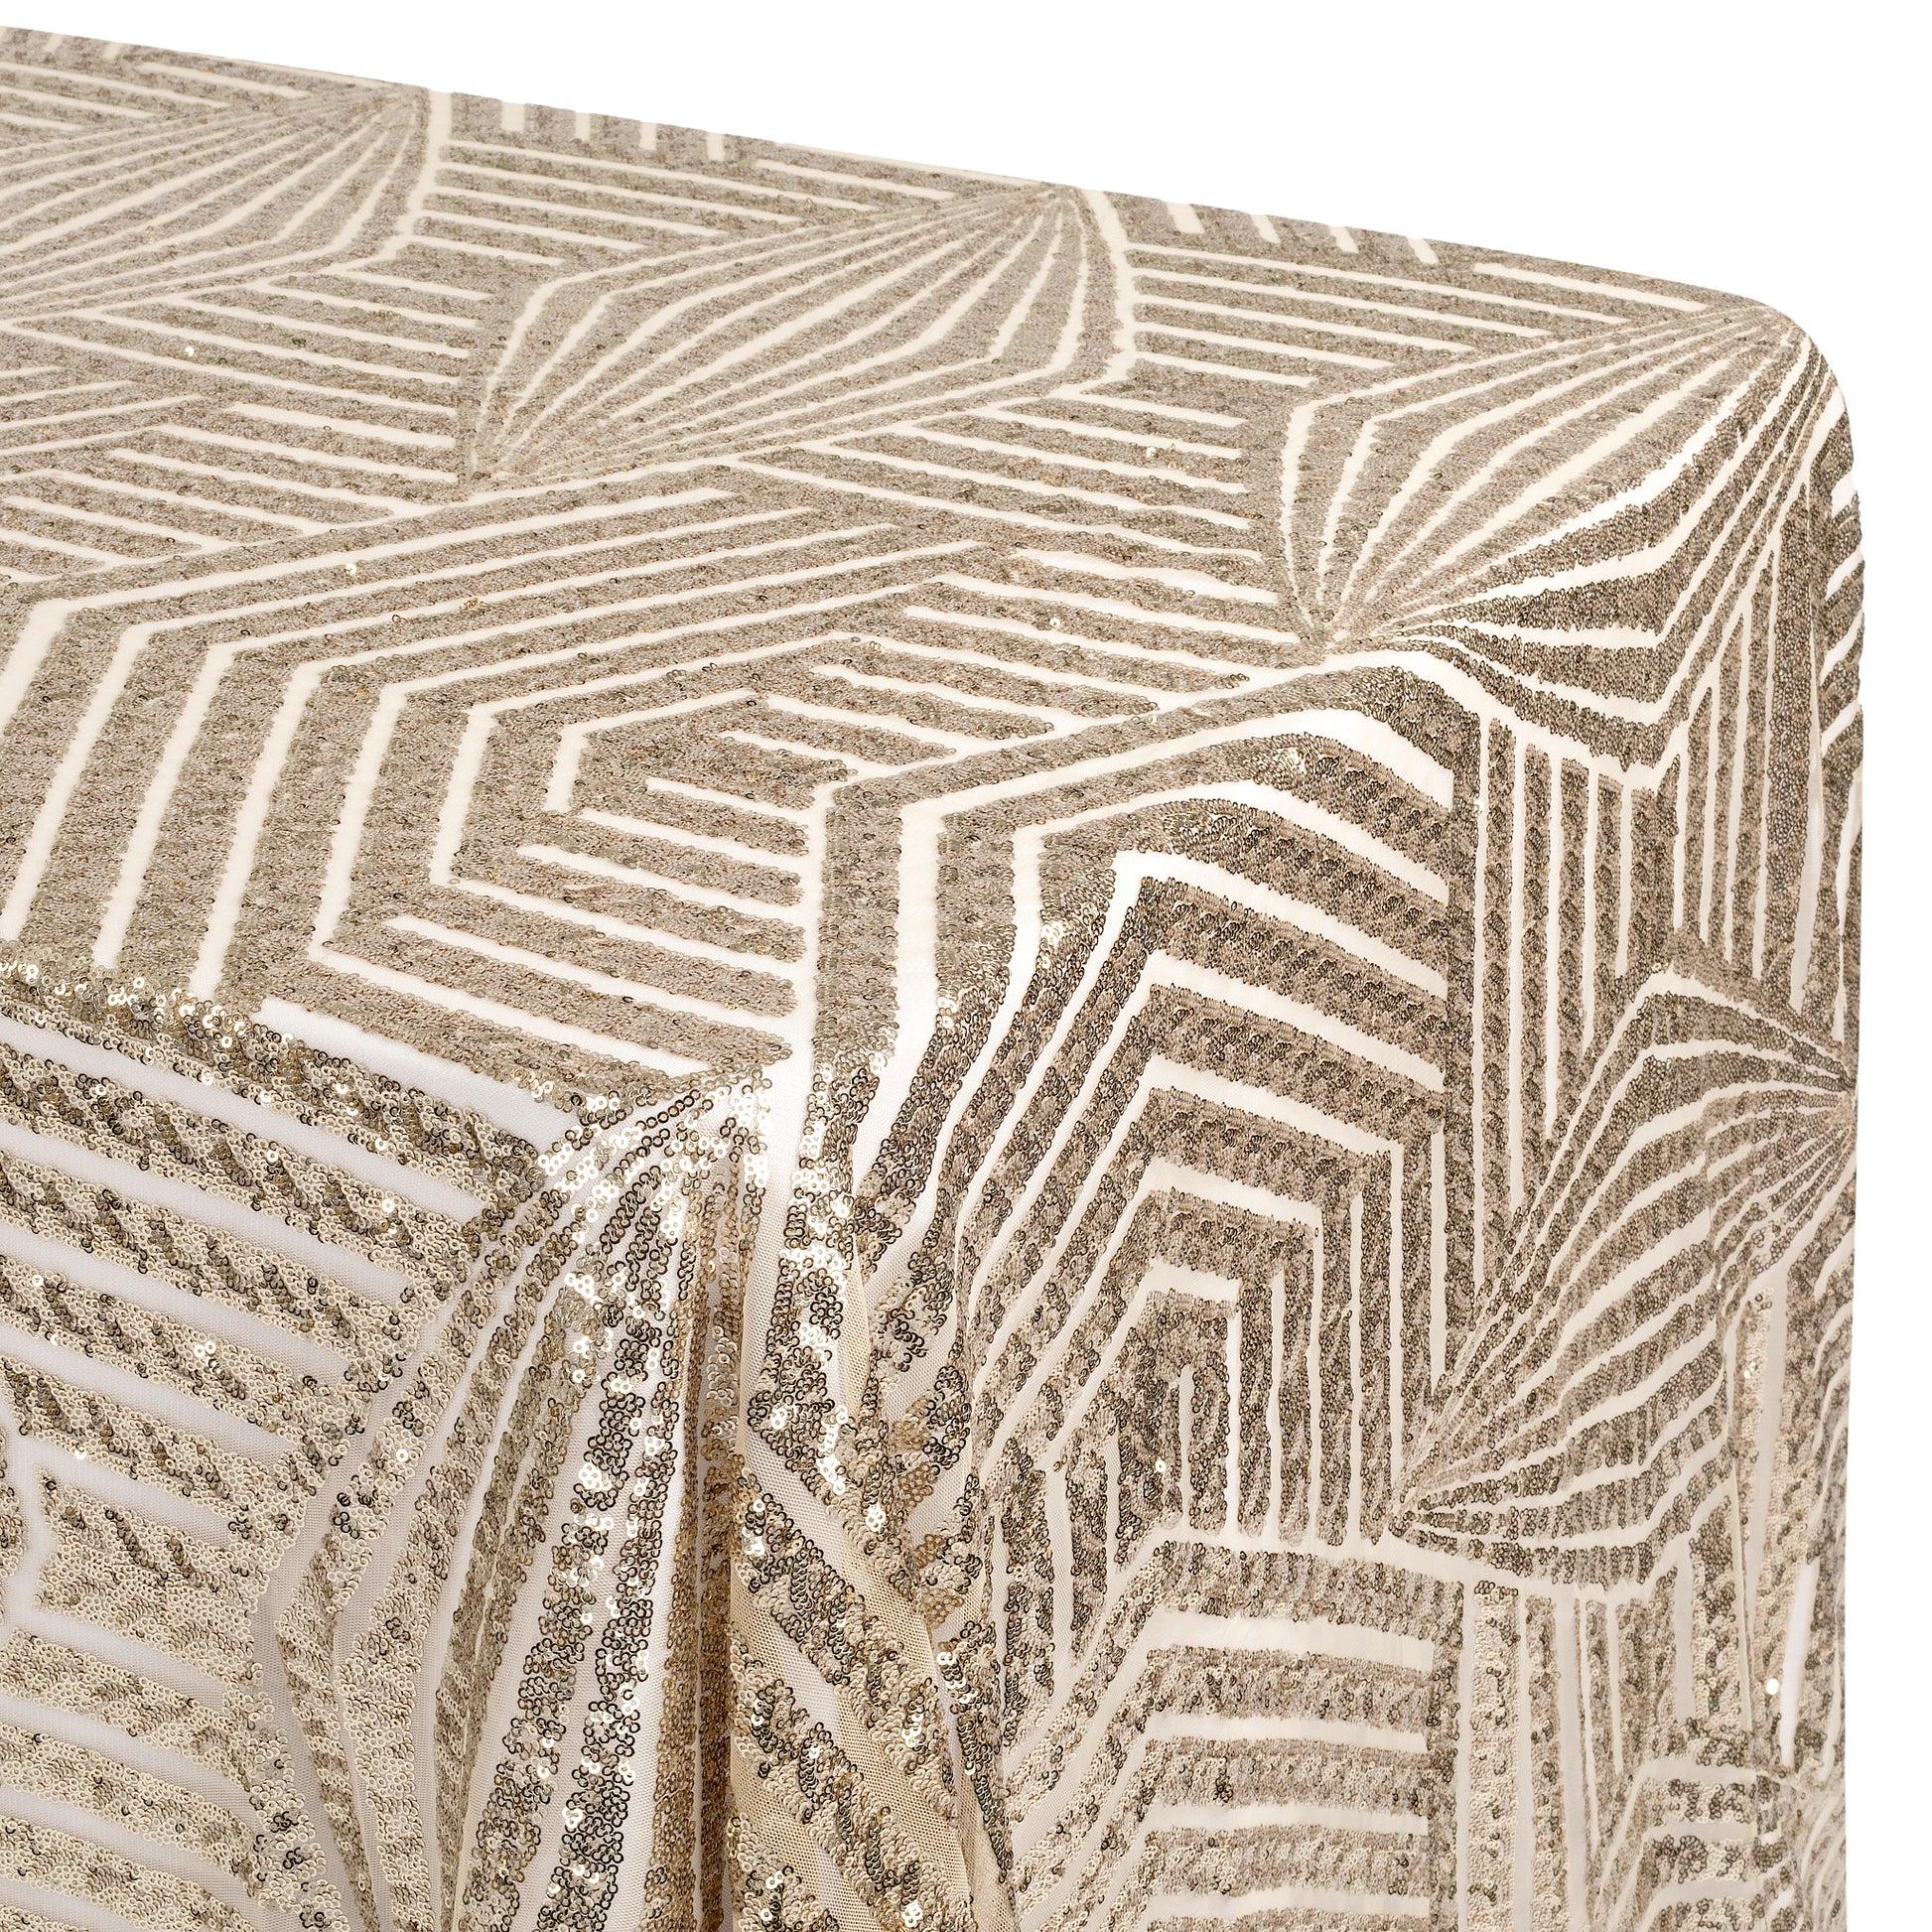 Geometric Glitz Art Deco Sequin Tablecloth 90"x132" Rectangular - Champagne - CV Linens